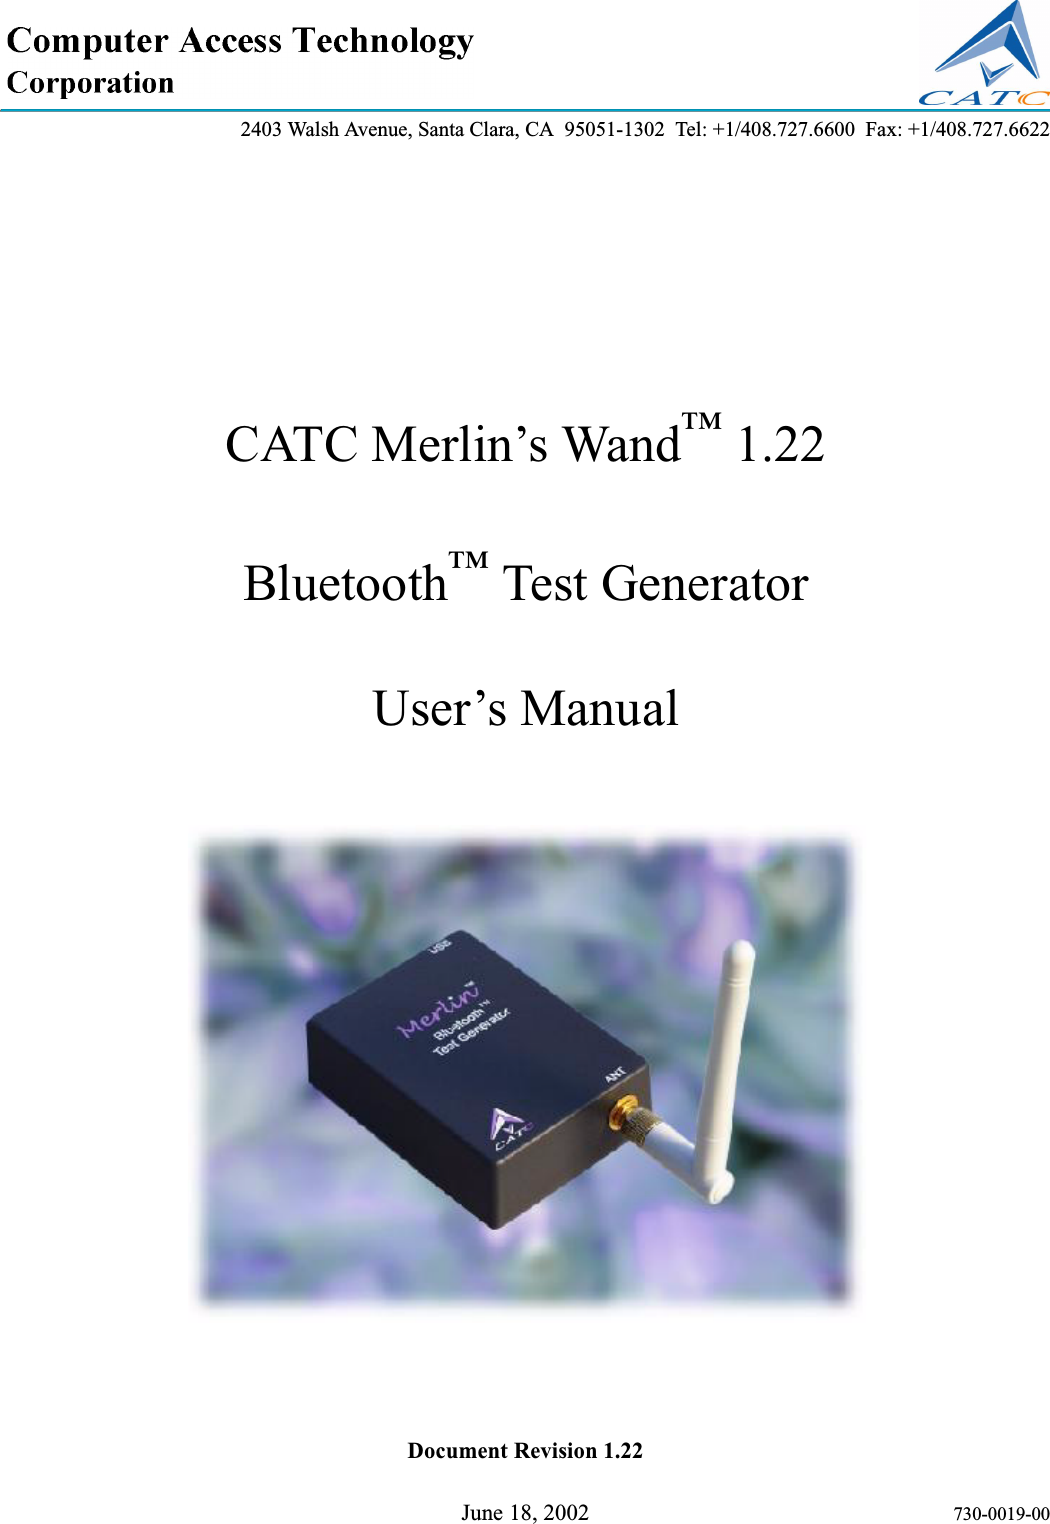 2403 Walsh Avenue, Santa Clara, CA  95051-1302  Tel: +1/408.727.6600  Fax: +1/408.727.6622Document Revision 1.22June 18, 2002 730-0019-00CATC Merlin’s Wand™ 1.22Bluetooth™ Test GeneratorUser’s Manual